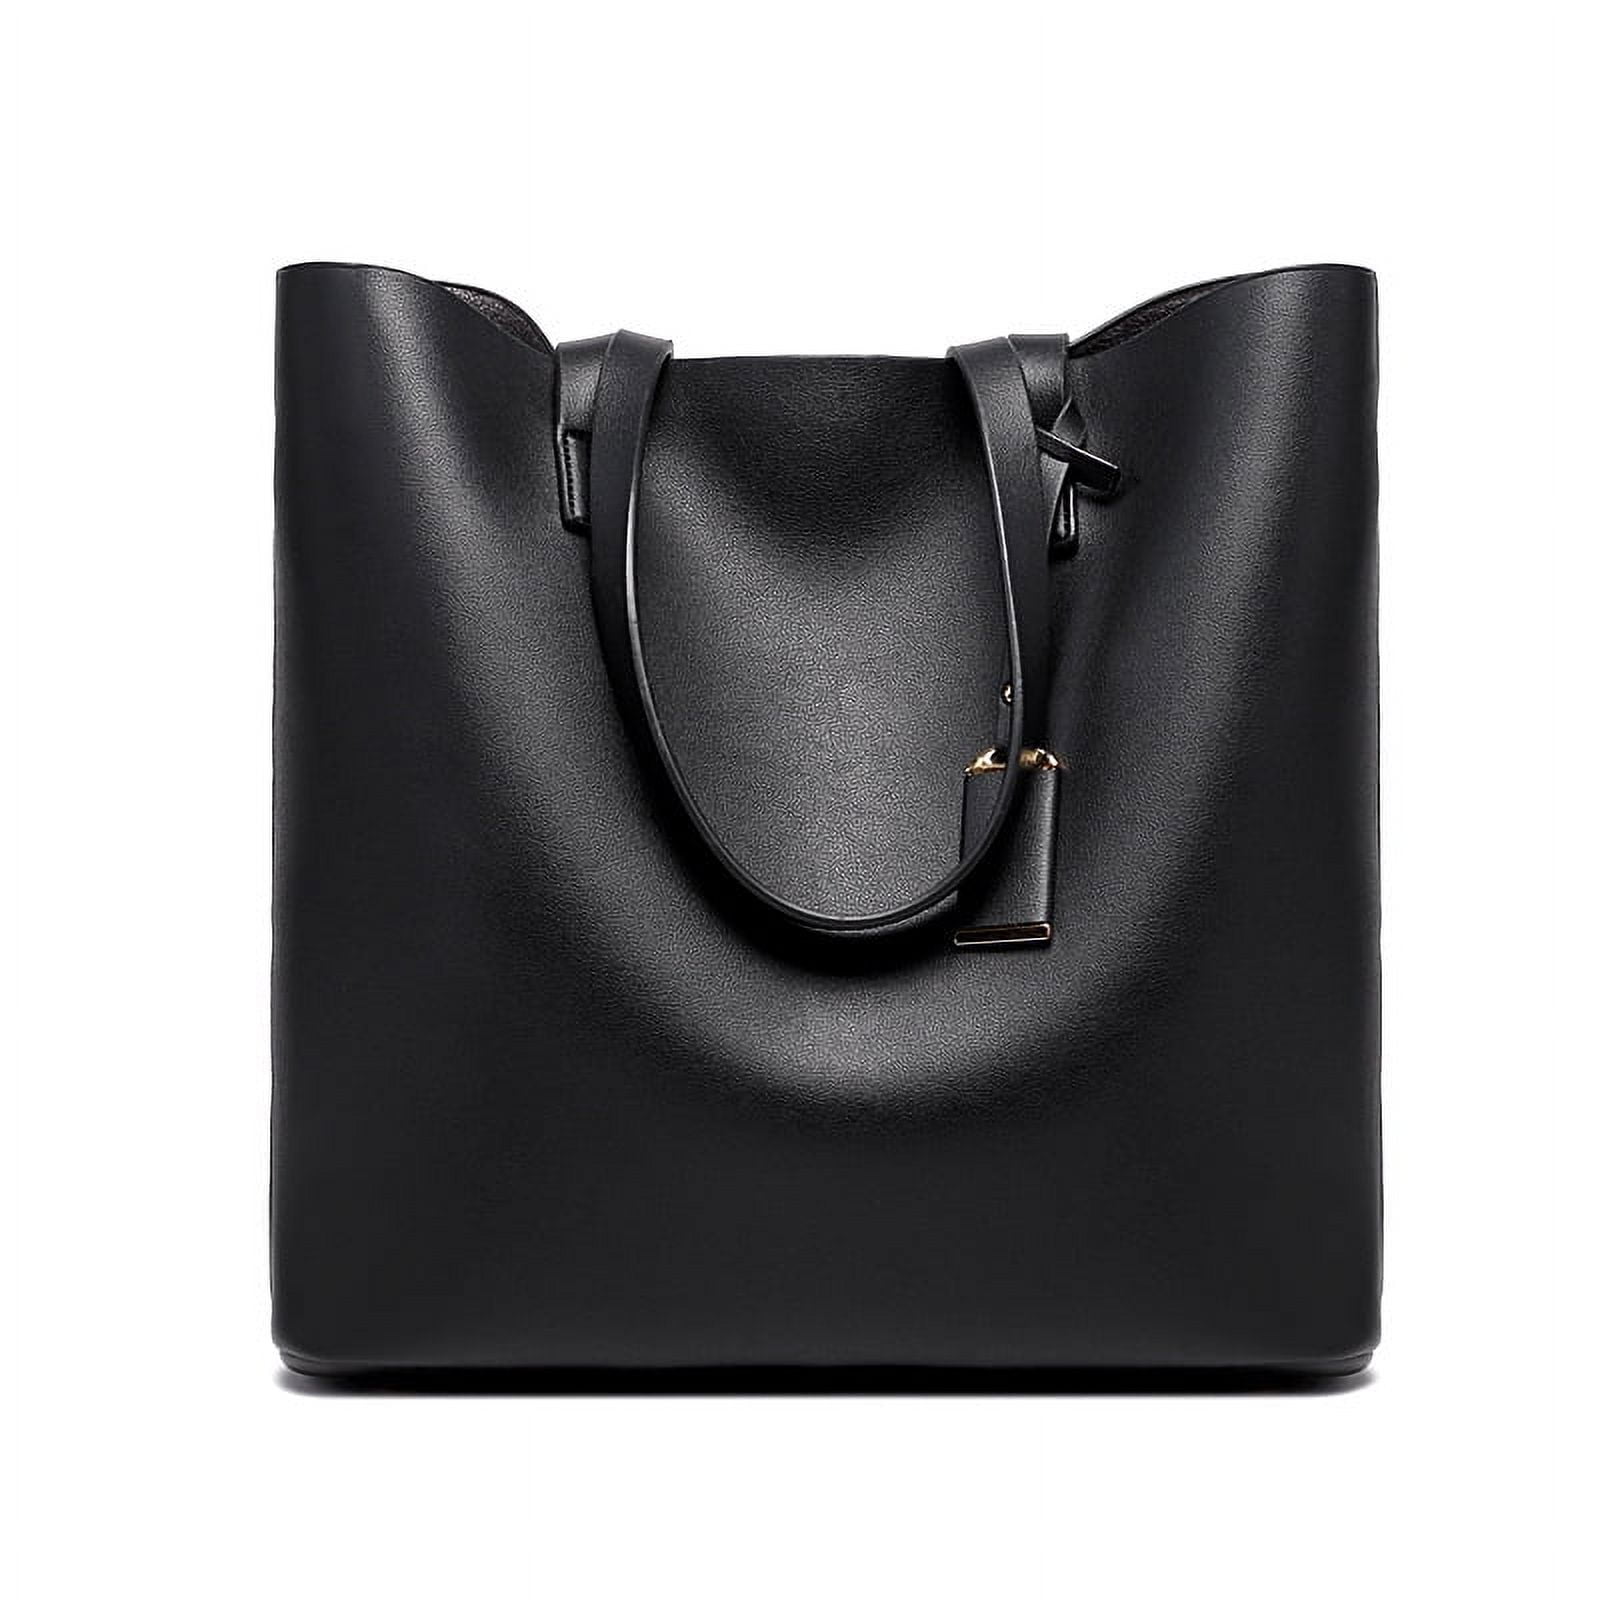 Toyella 2020 new handbag fashion bags handbag shoulder manufacturers selling  a generation Black 